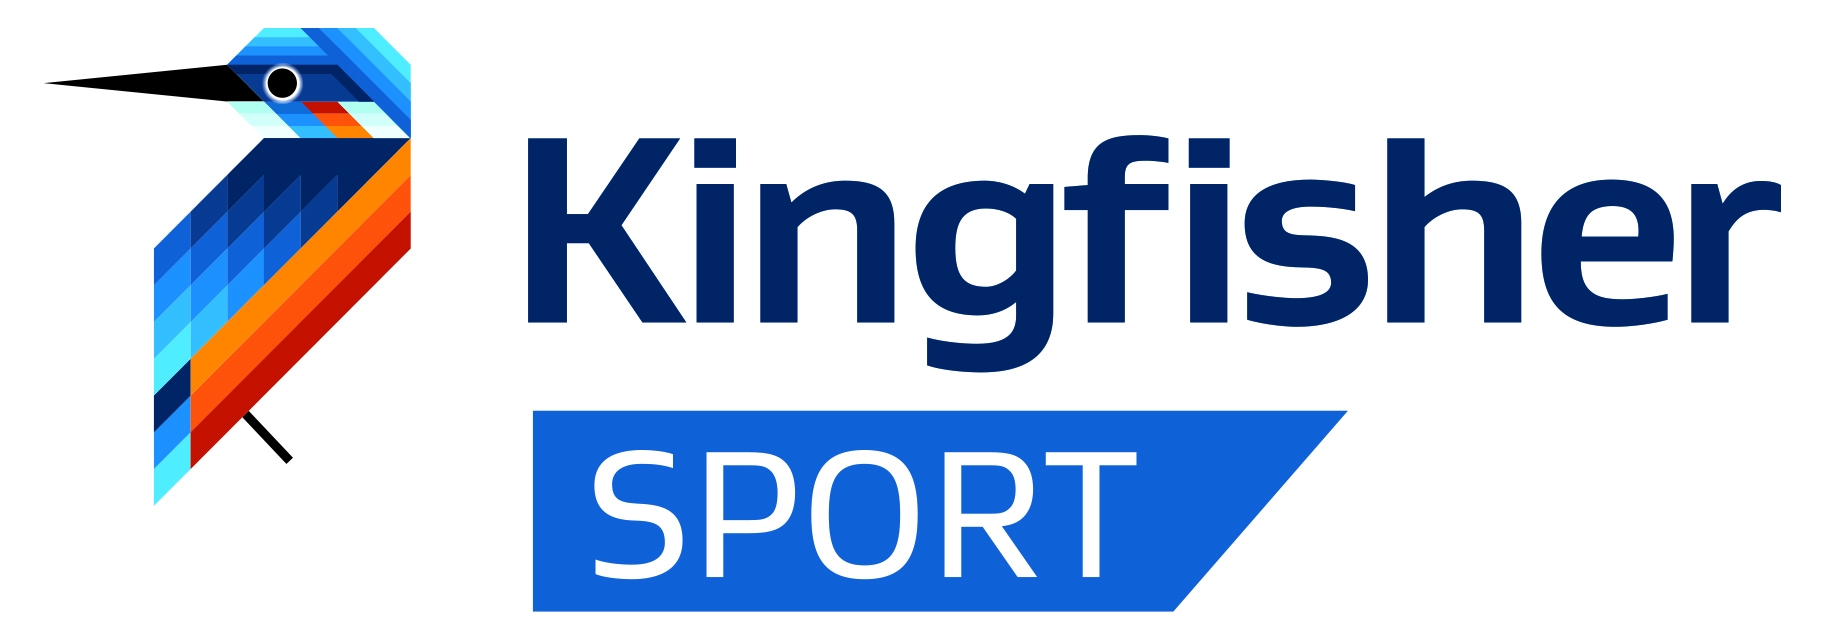 Kingfisher Sport_Compact